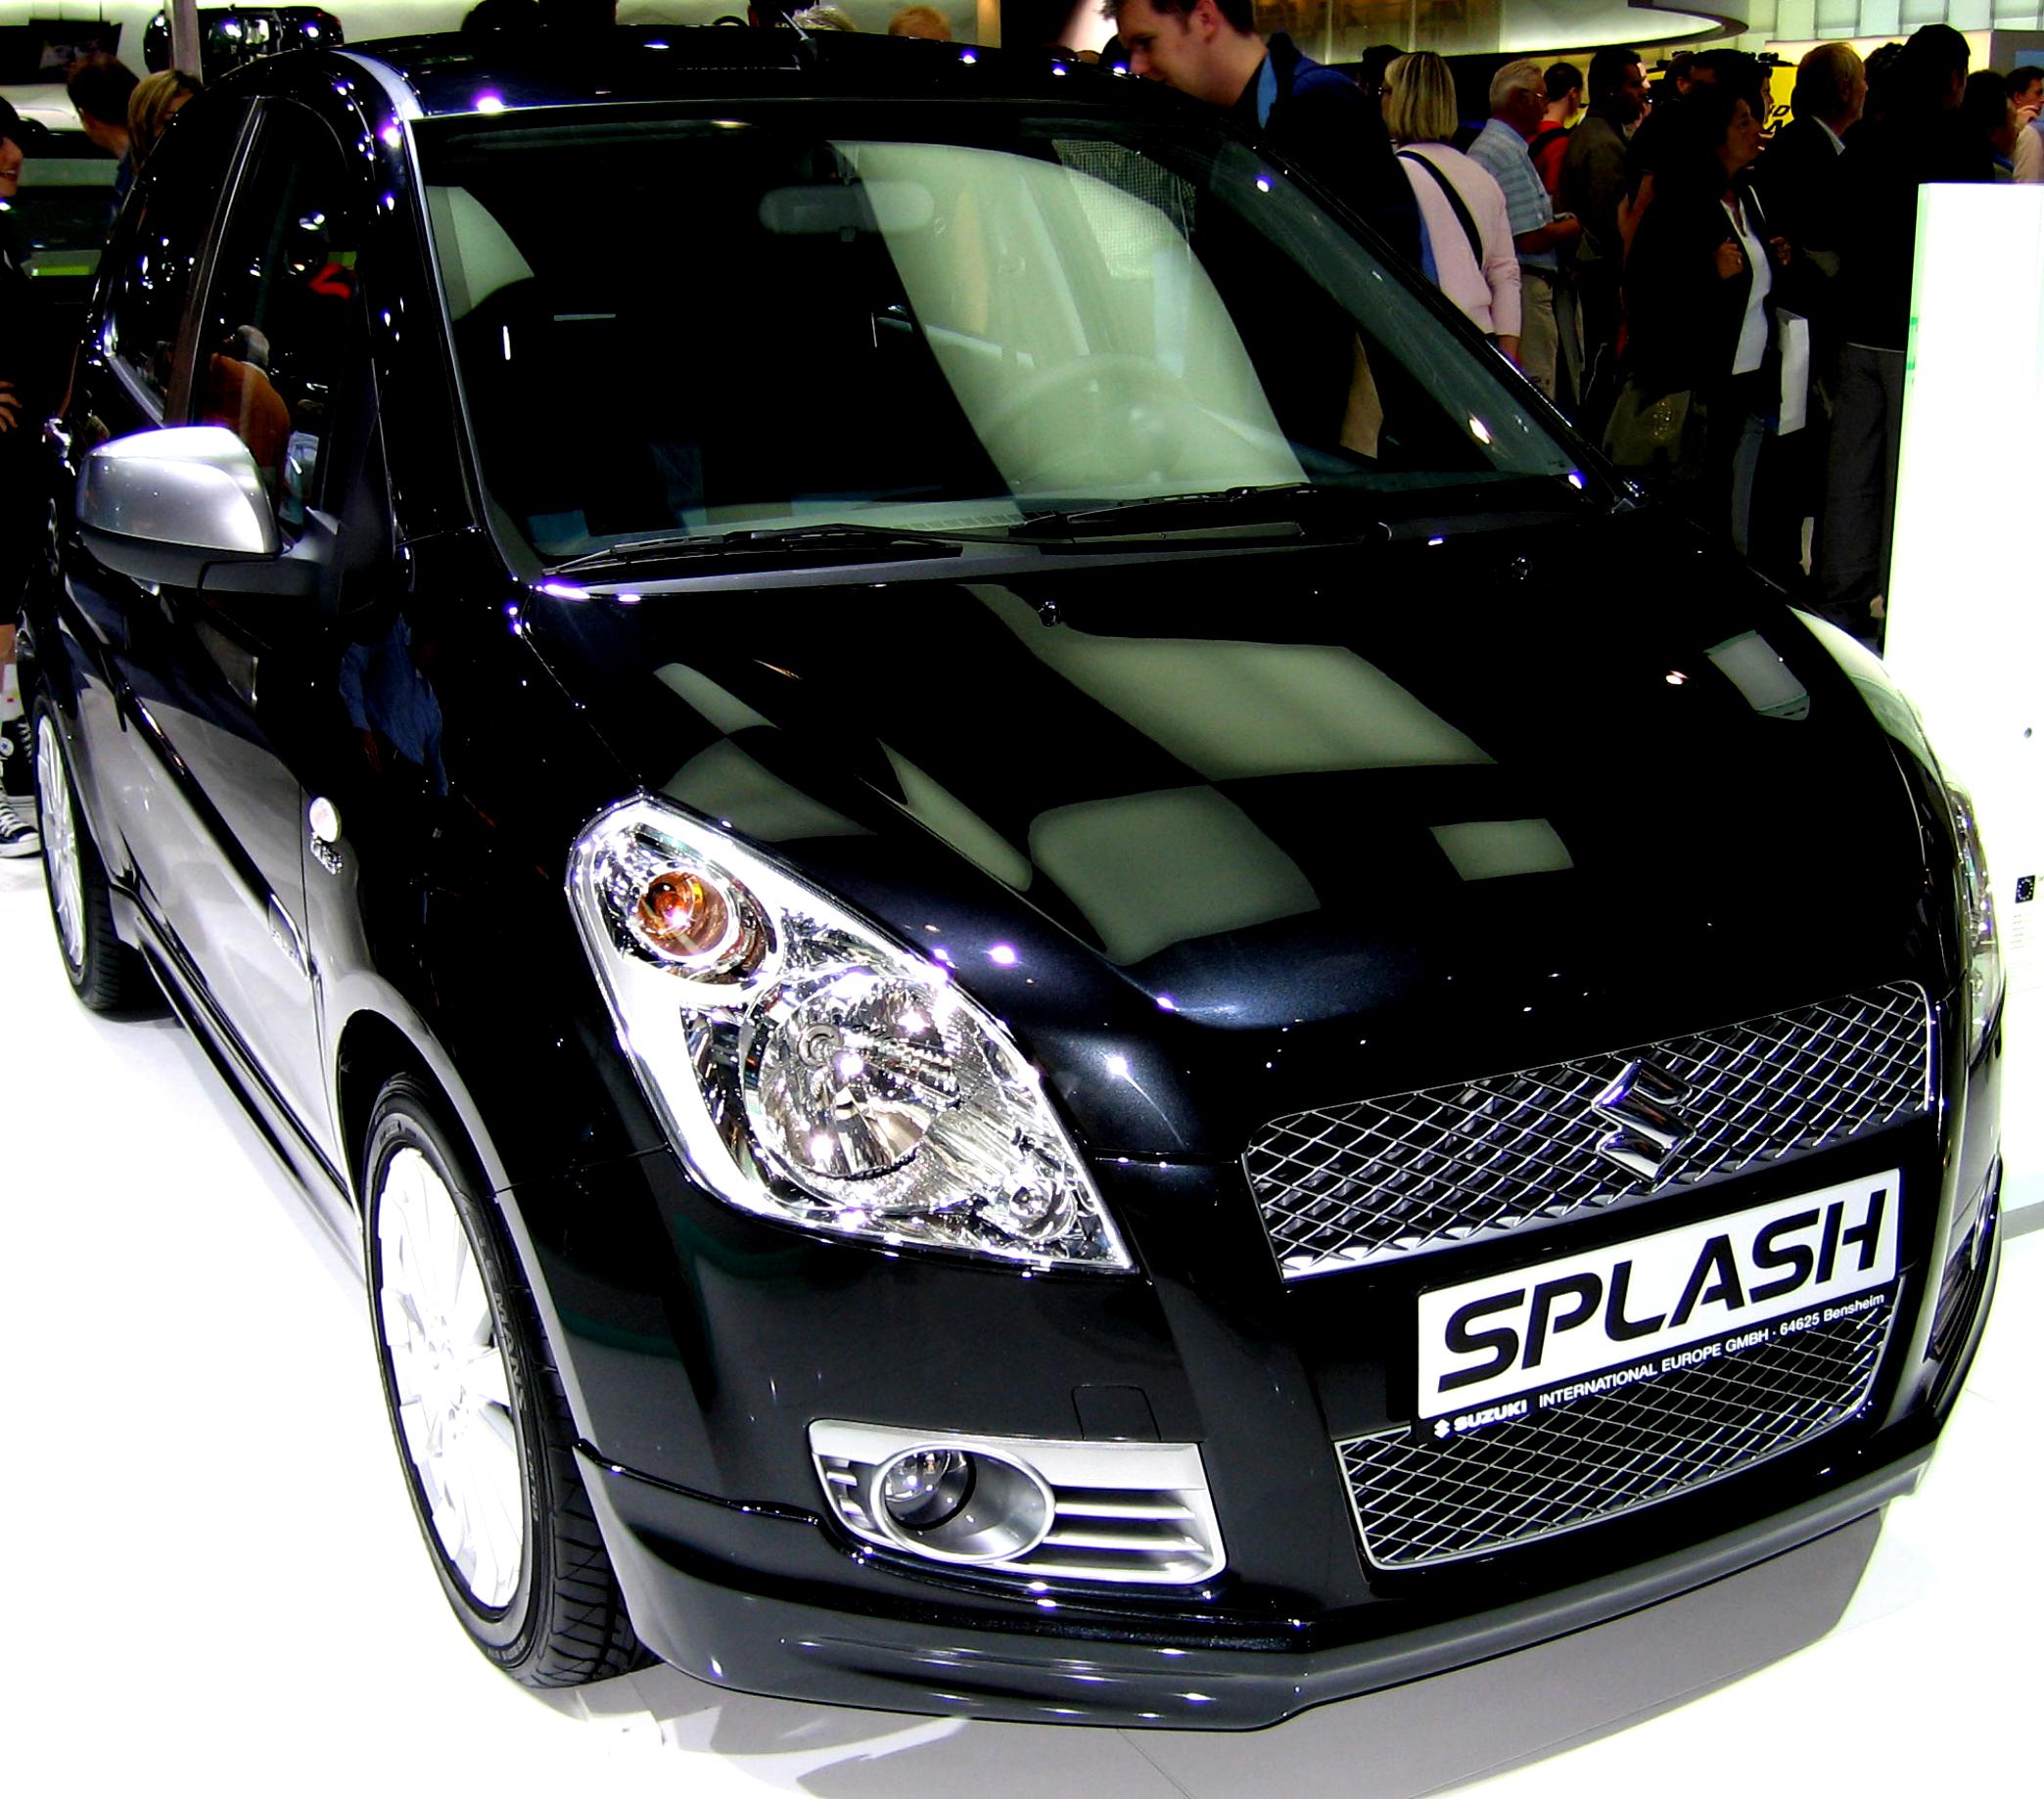 Suzuki Splash 2007 #33